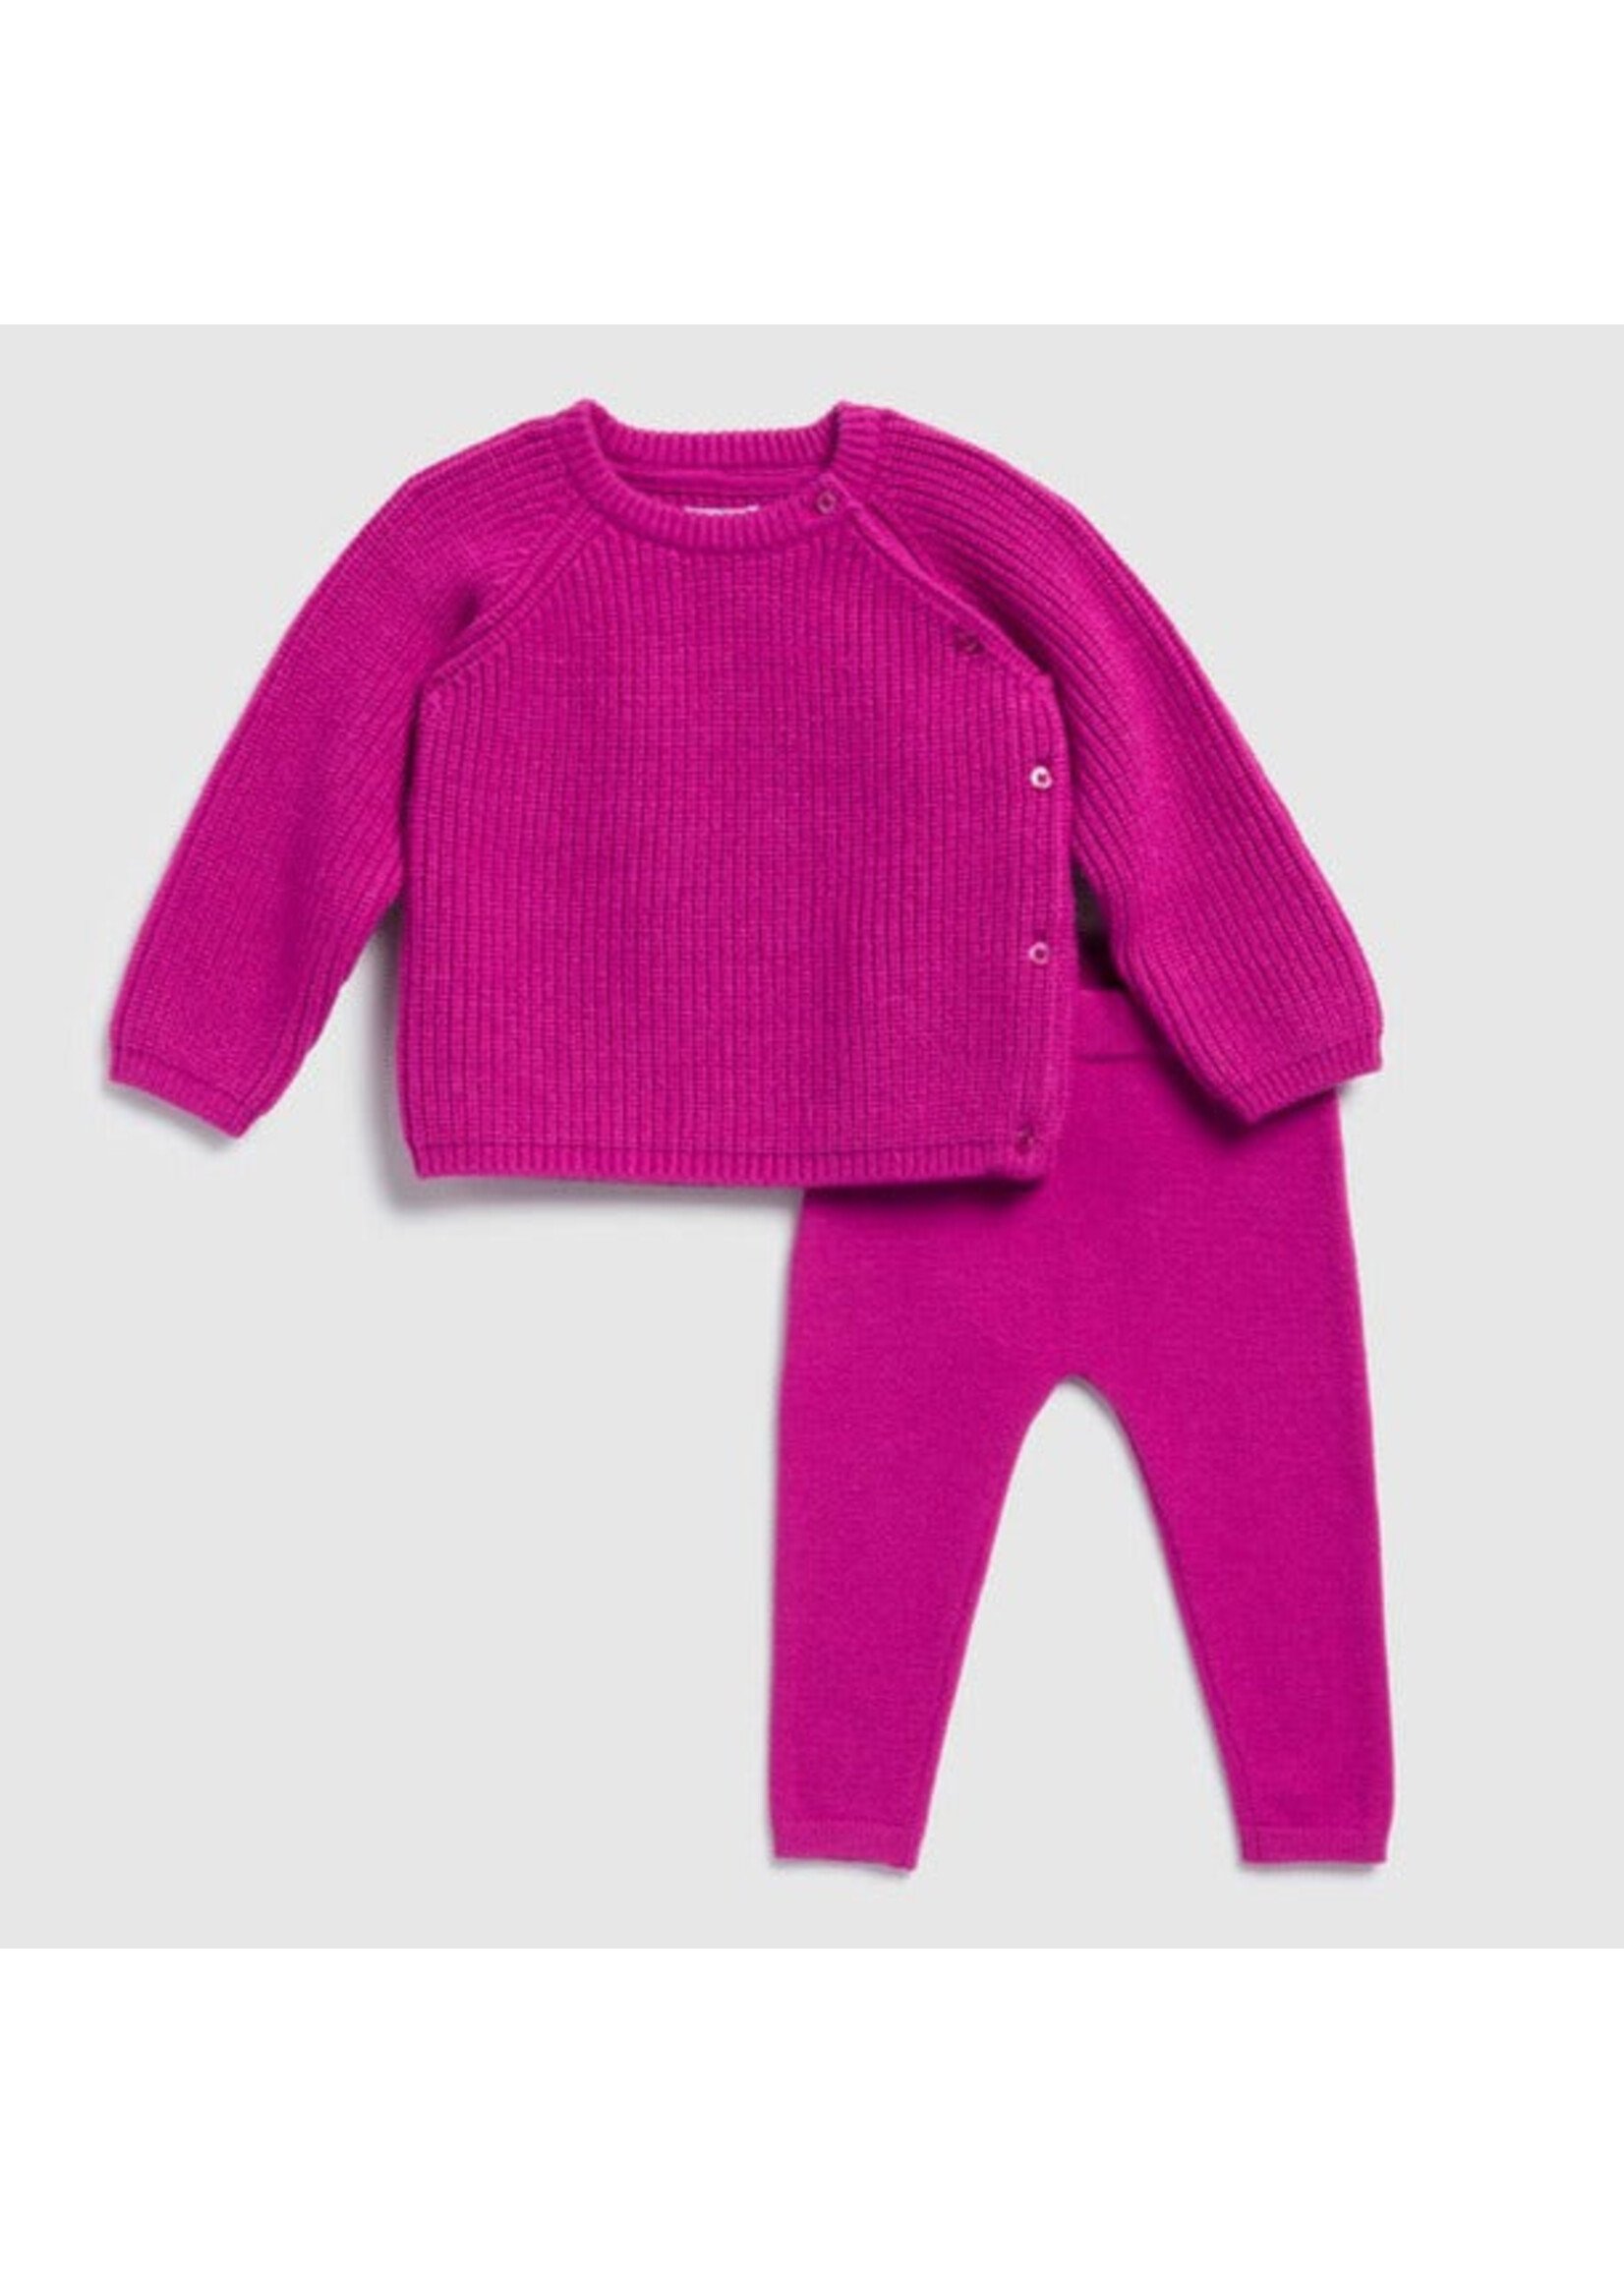 Splendid Splendid Hot Pink Sweater Set